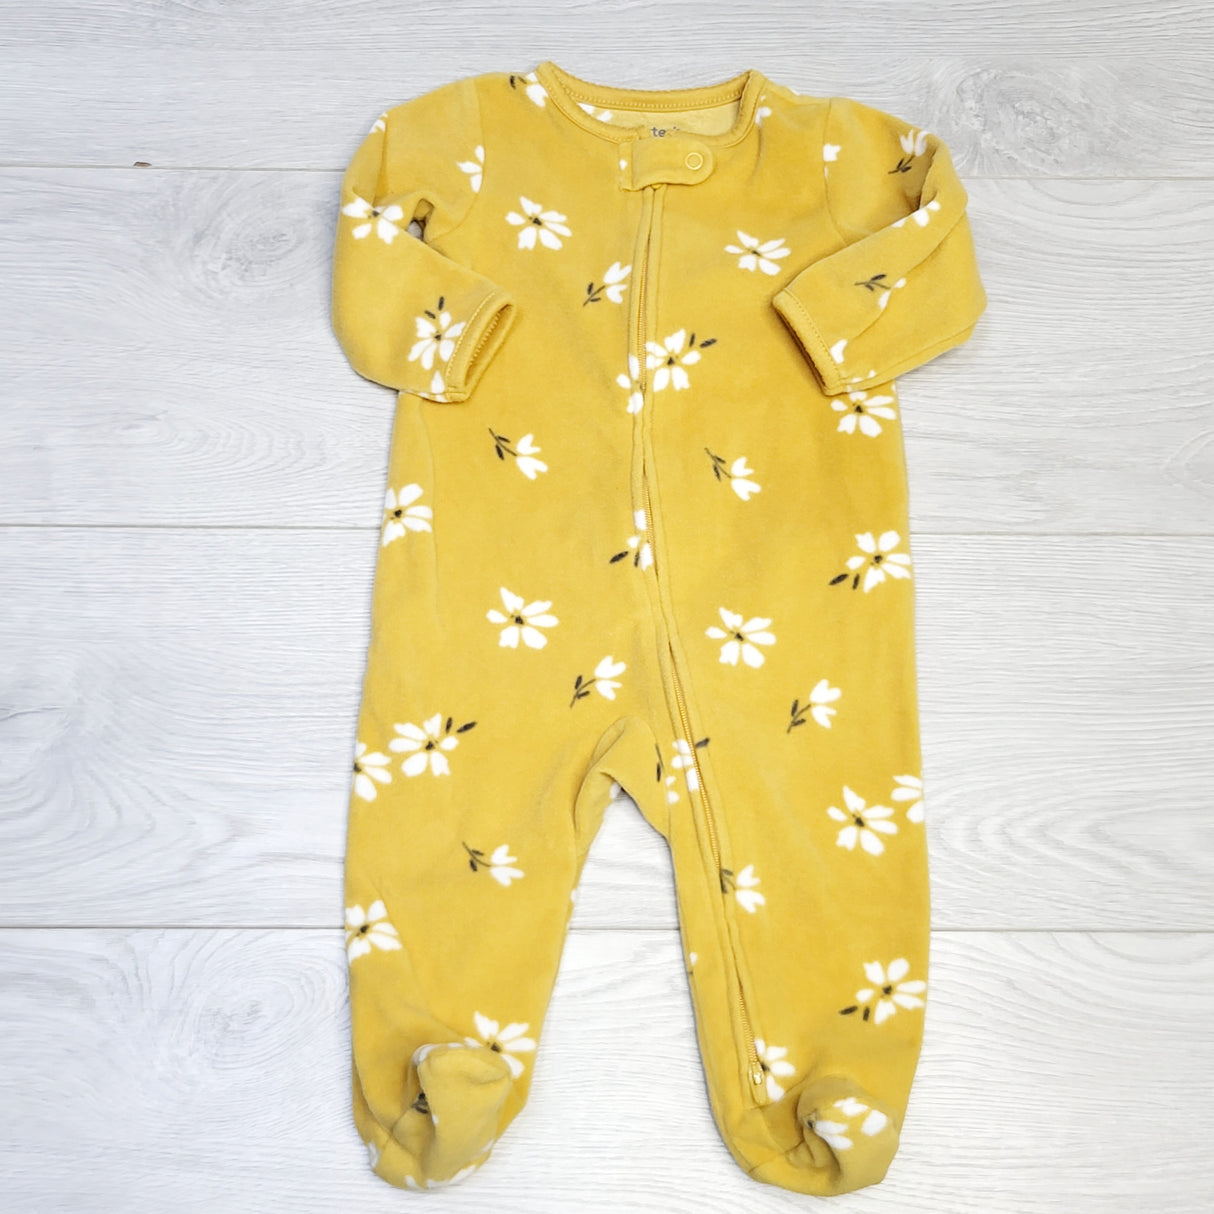 COWN1 - Child of Mine yellow floral print zippered fleece sleeper. Size 3-6 months